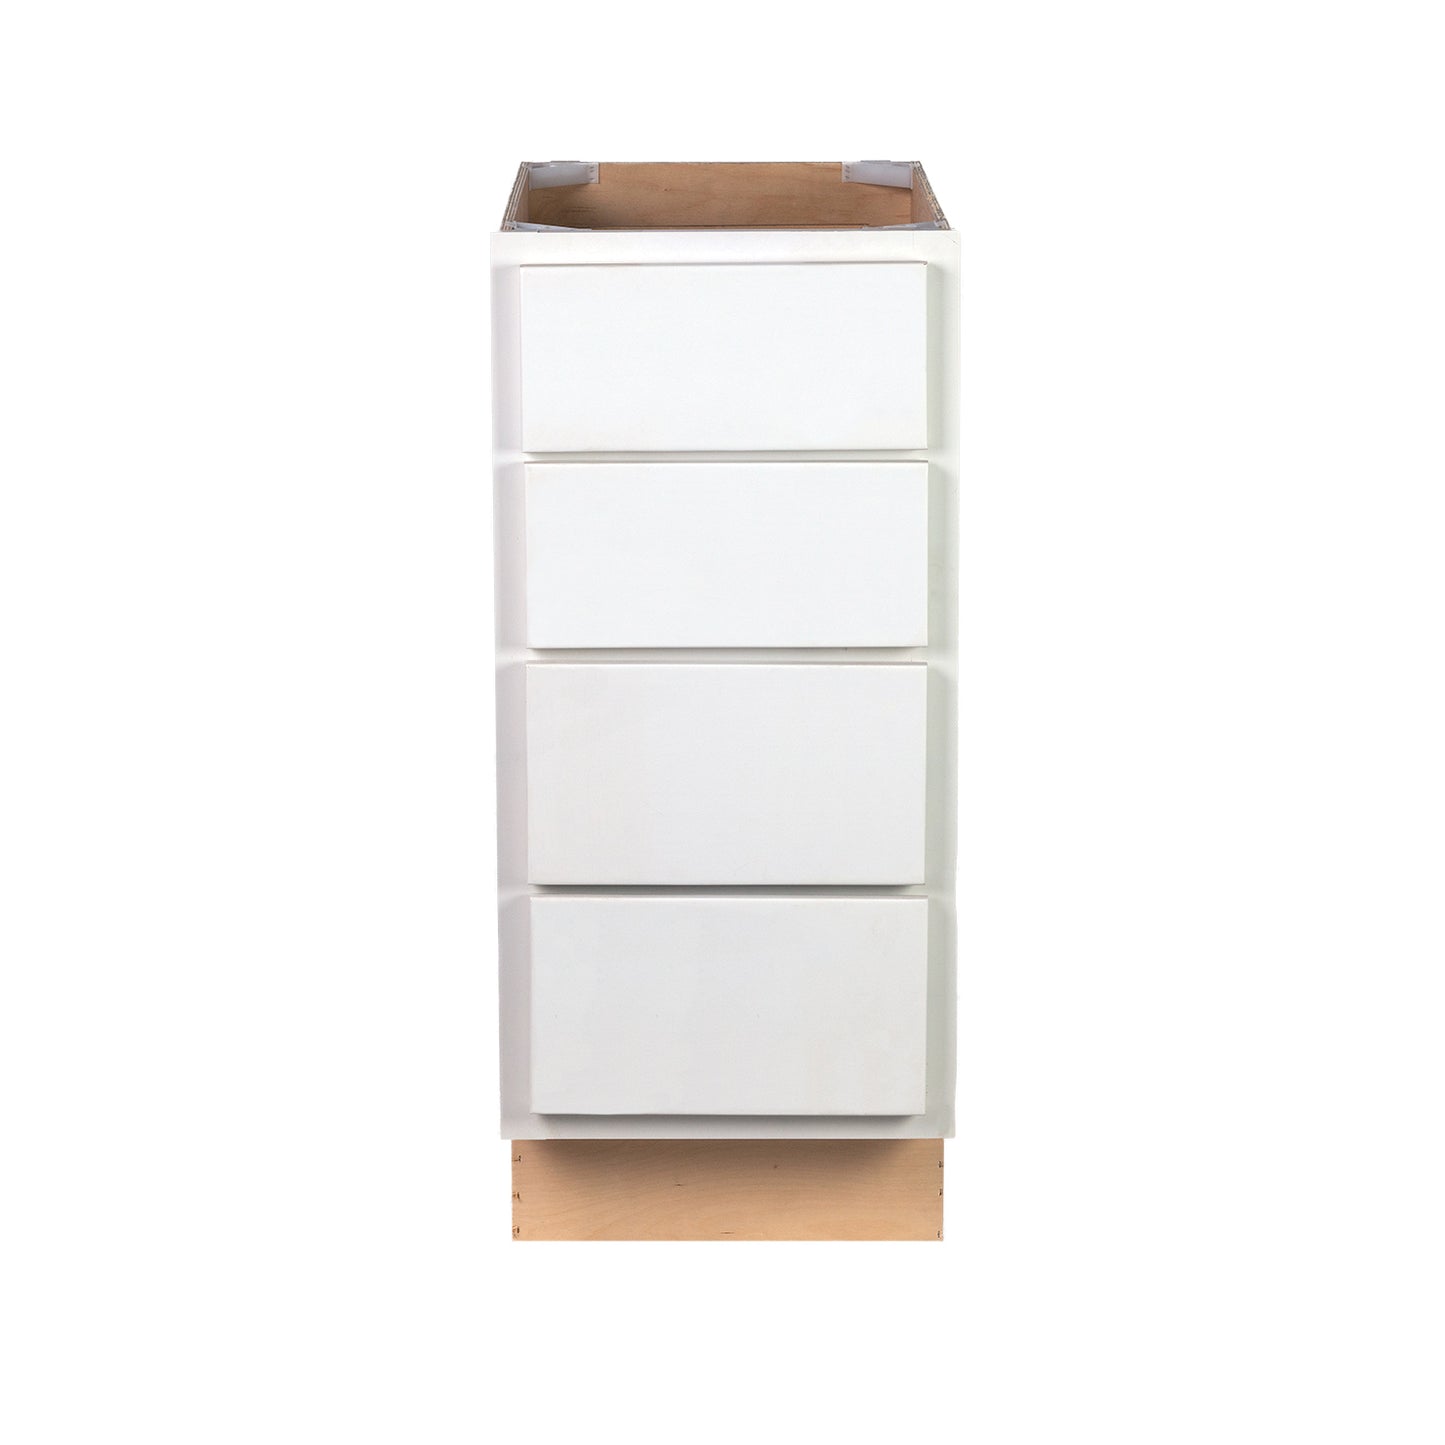 Quicklock RTA (Ready-to-Assemble) Pure White 4 Drawer 24" Base Cabinet | 24"Wx34.5"Hx24"D